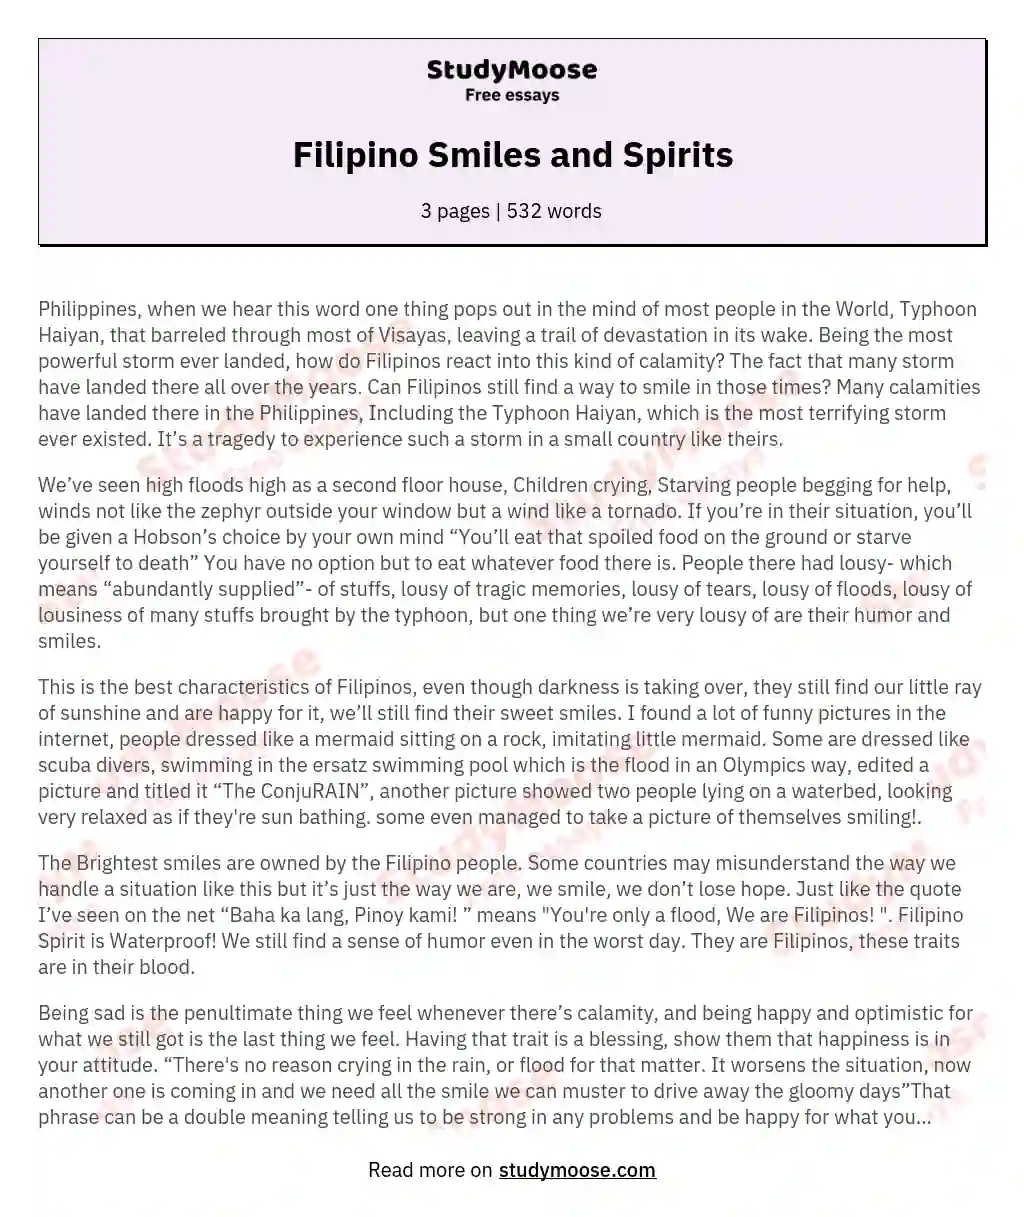 Filipino Smiles and Spirits essay